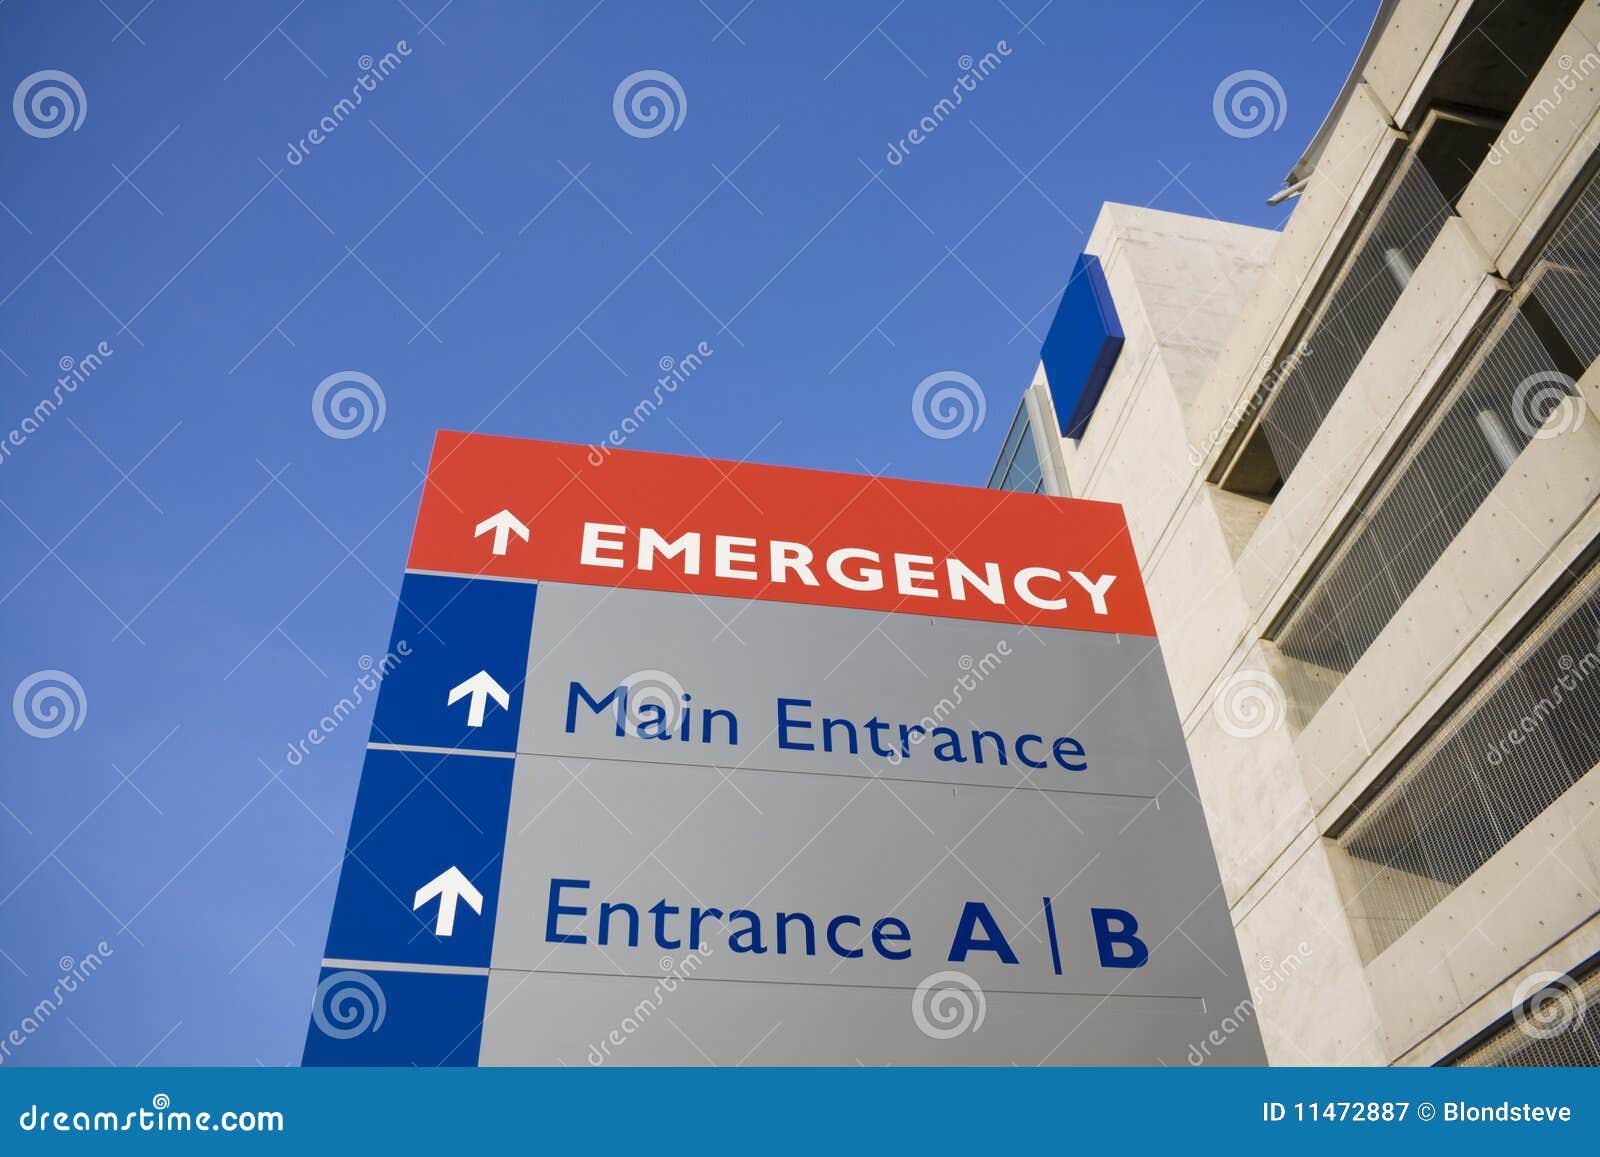 modern hospital and emergency sign